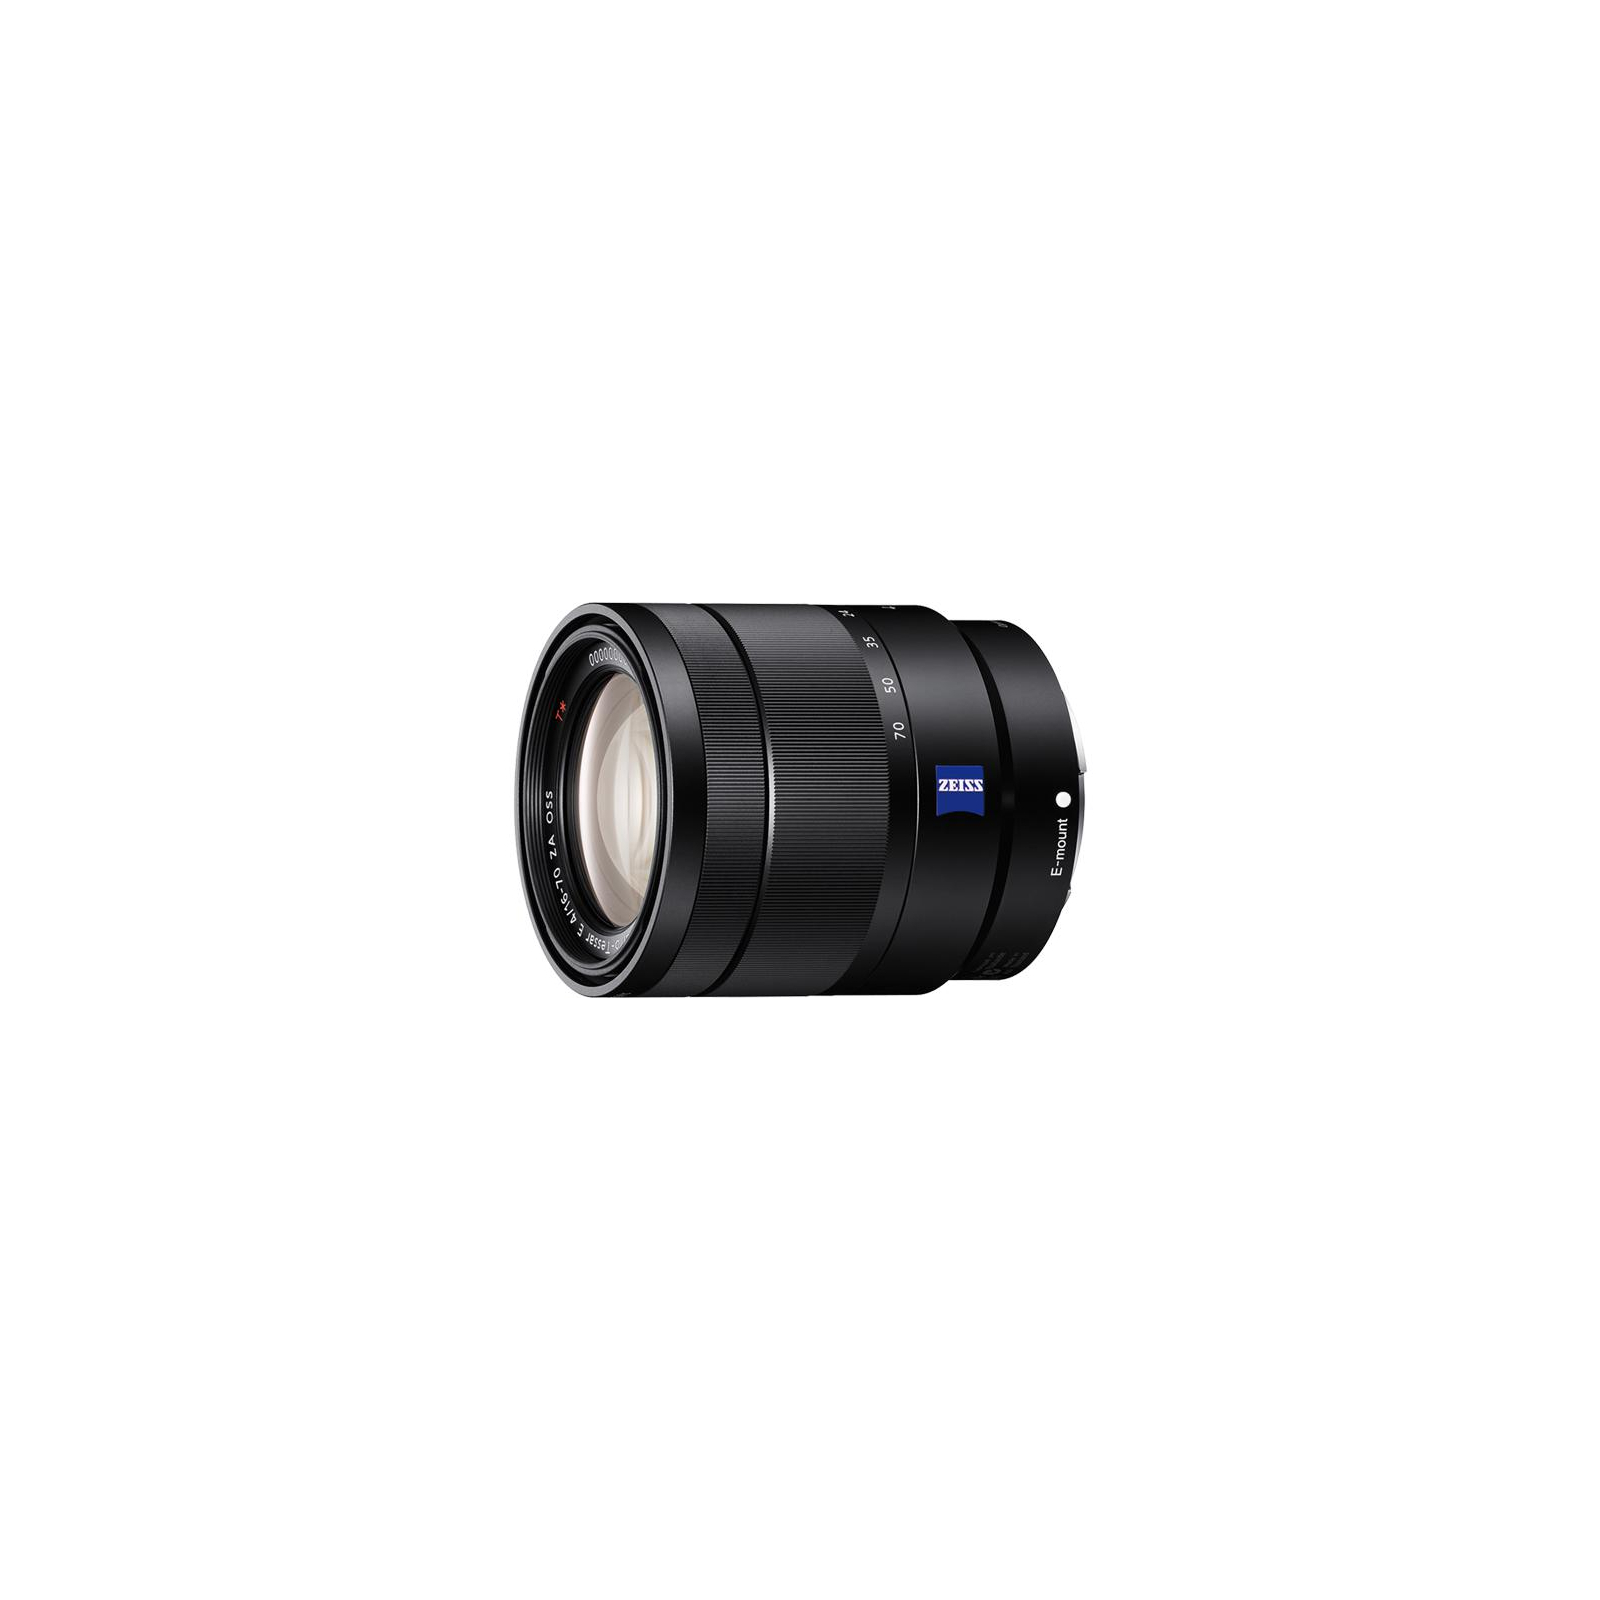 Об'єктив Sony 16-70mm f/4 OSS Carl Zeiss for NEX (SEL1670Z.AE) зображення 2